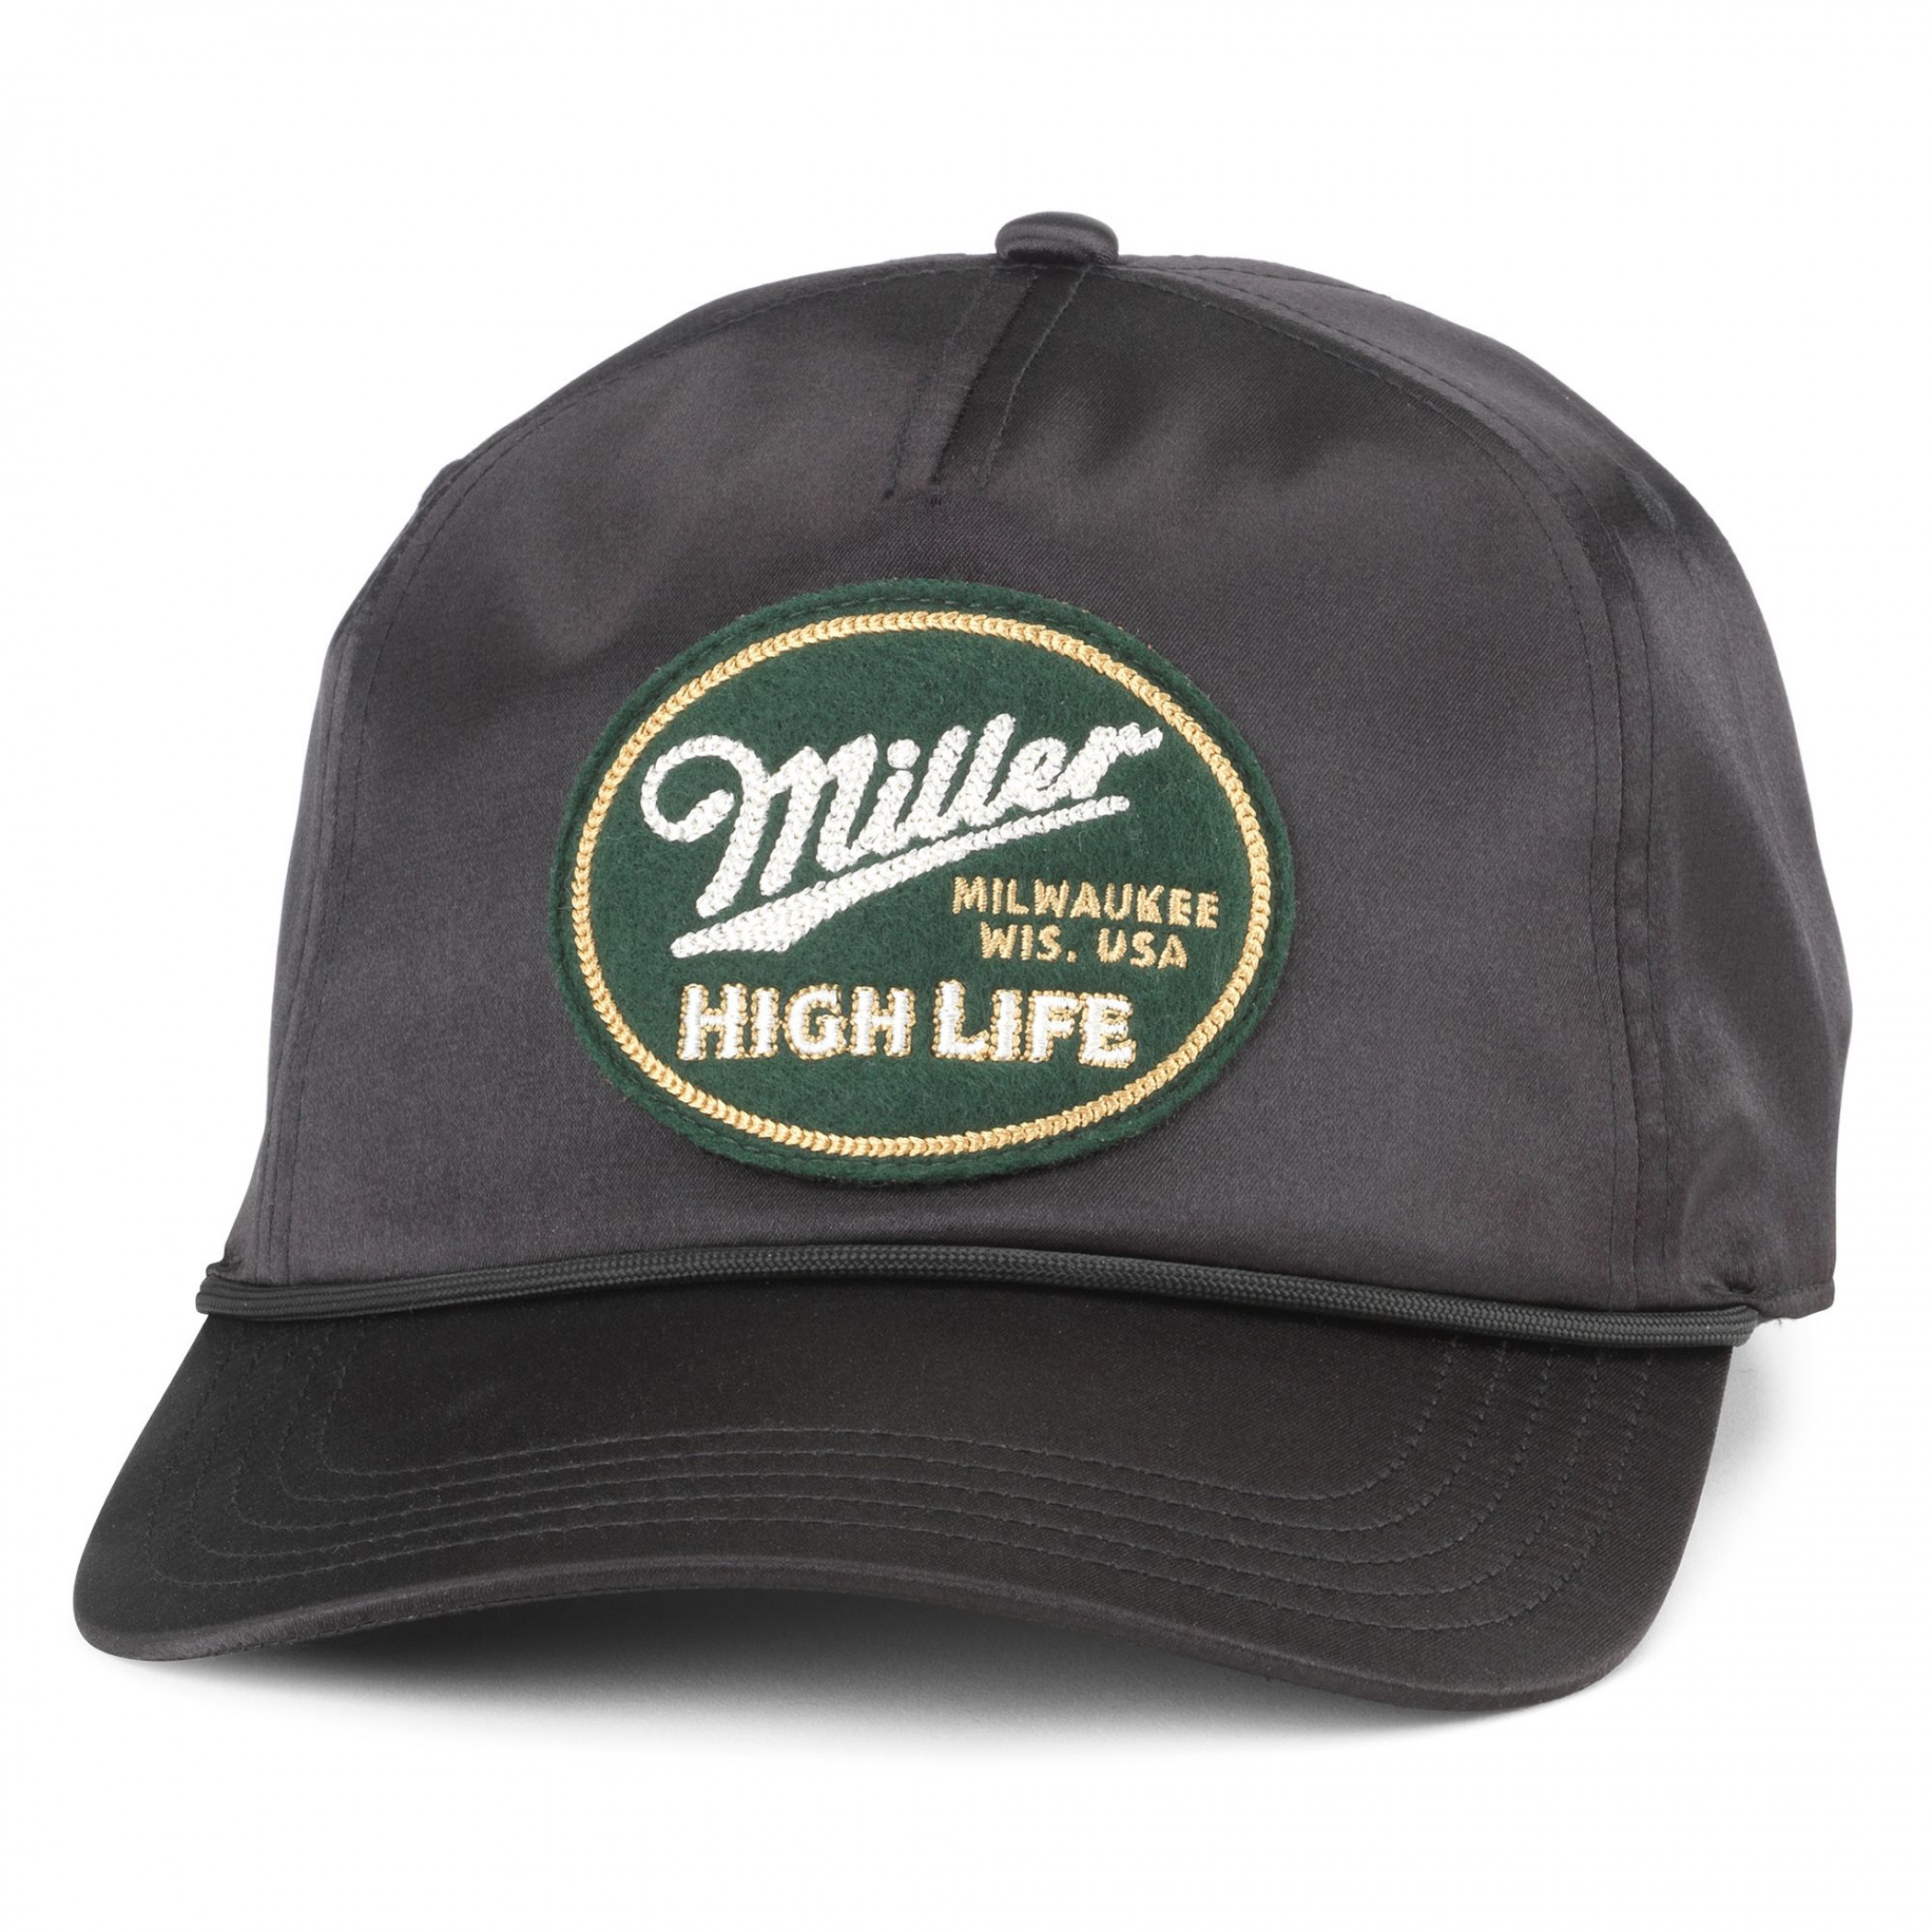 Miller High Life Patch Black Colorway Adjustable Rope Hat